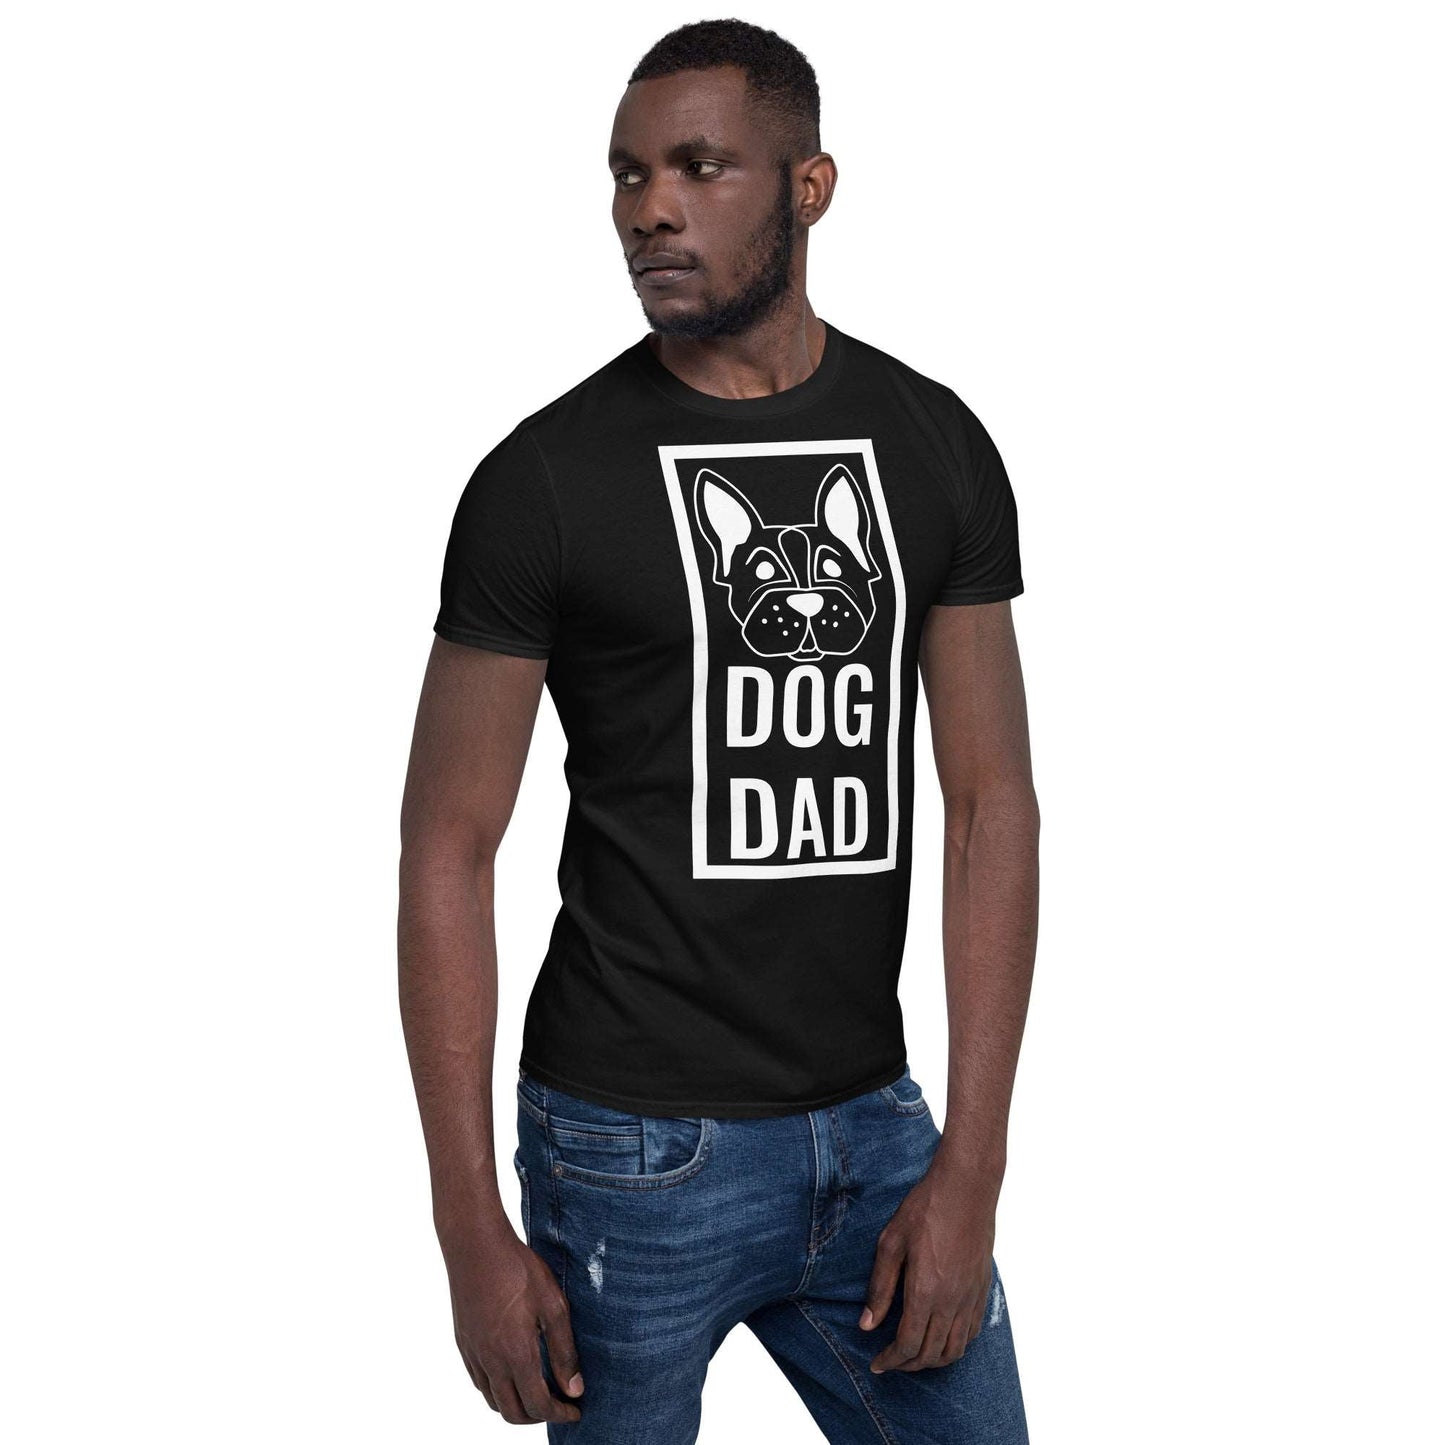 DOG DAD Black and White Short-Sleeve Unisex T-Shirt - Lizard Vigilante